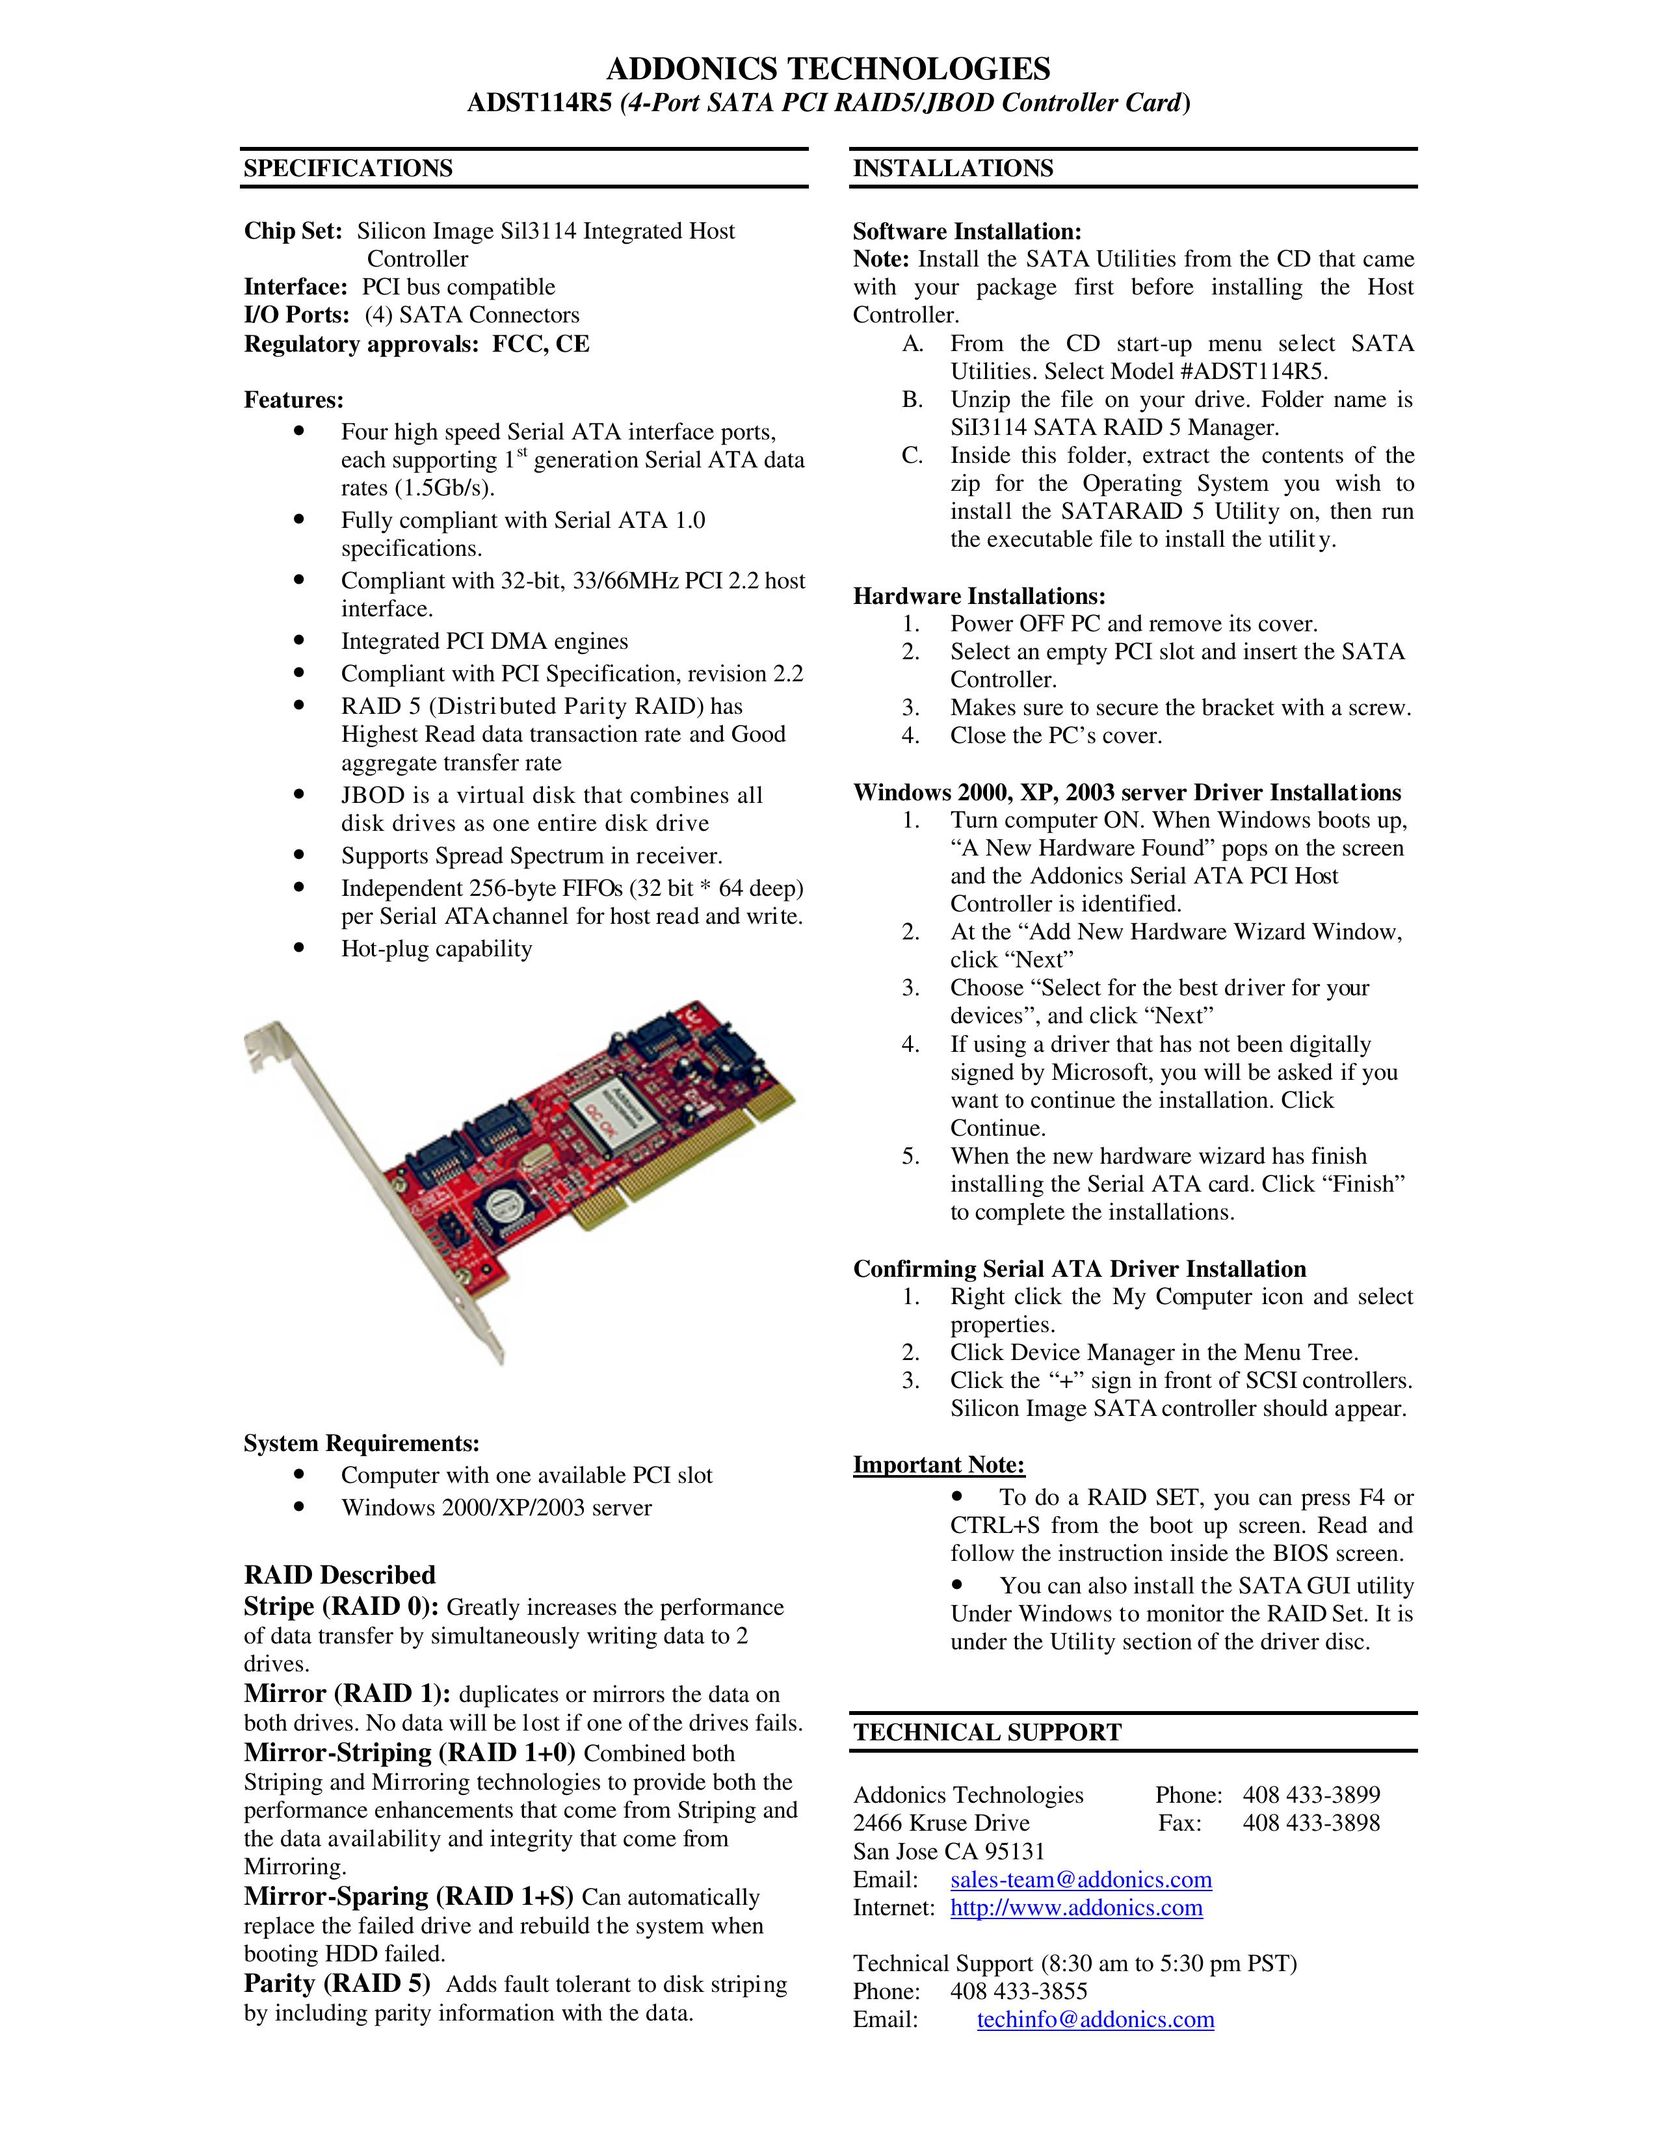 Addonics Technologies ADST114R5 Network Card User Manual